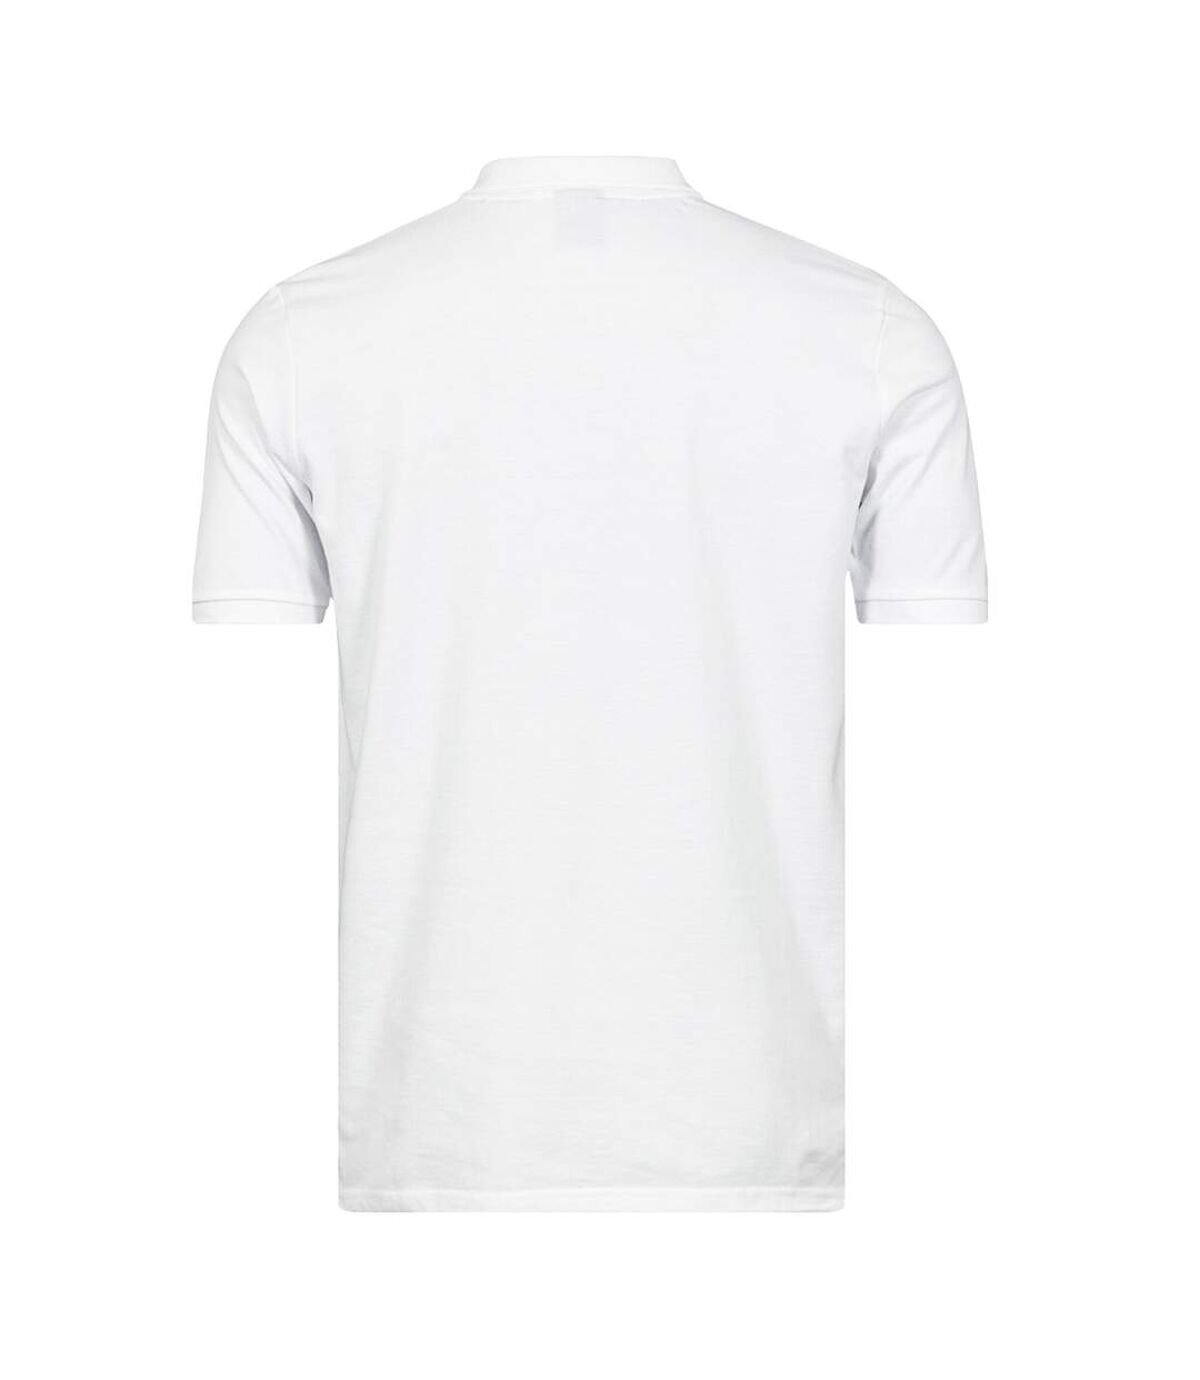 B&C Mens Heavymill Short Sleeve Cotton Polo Shirt (White*)